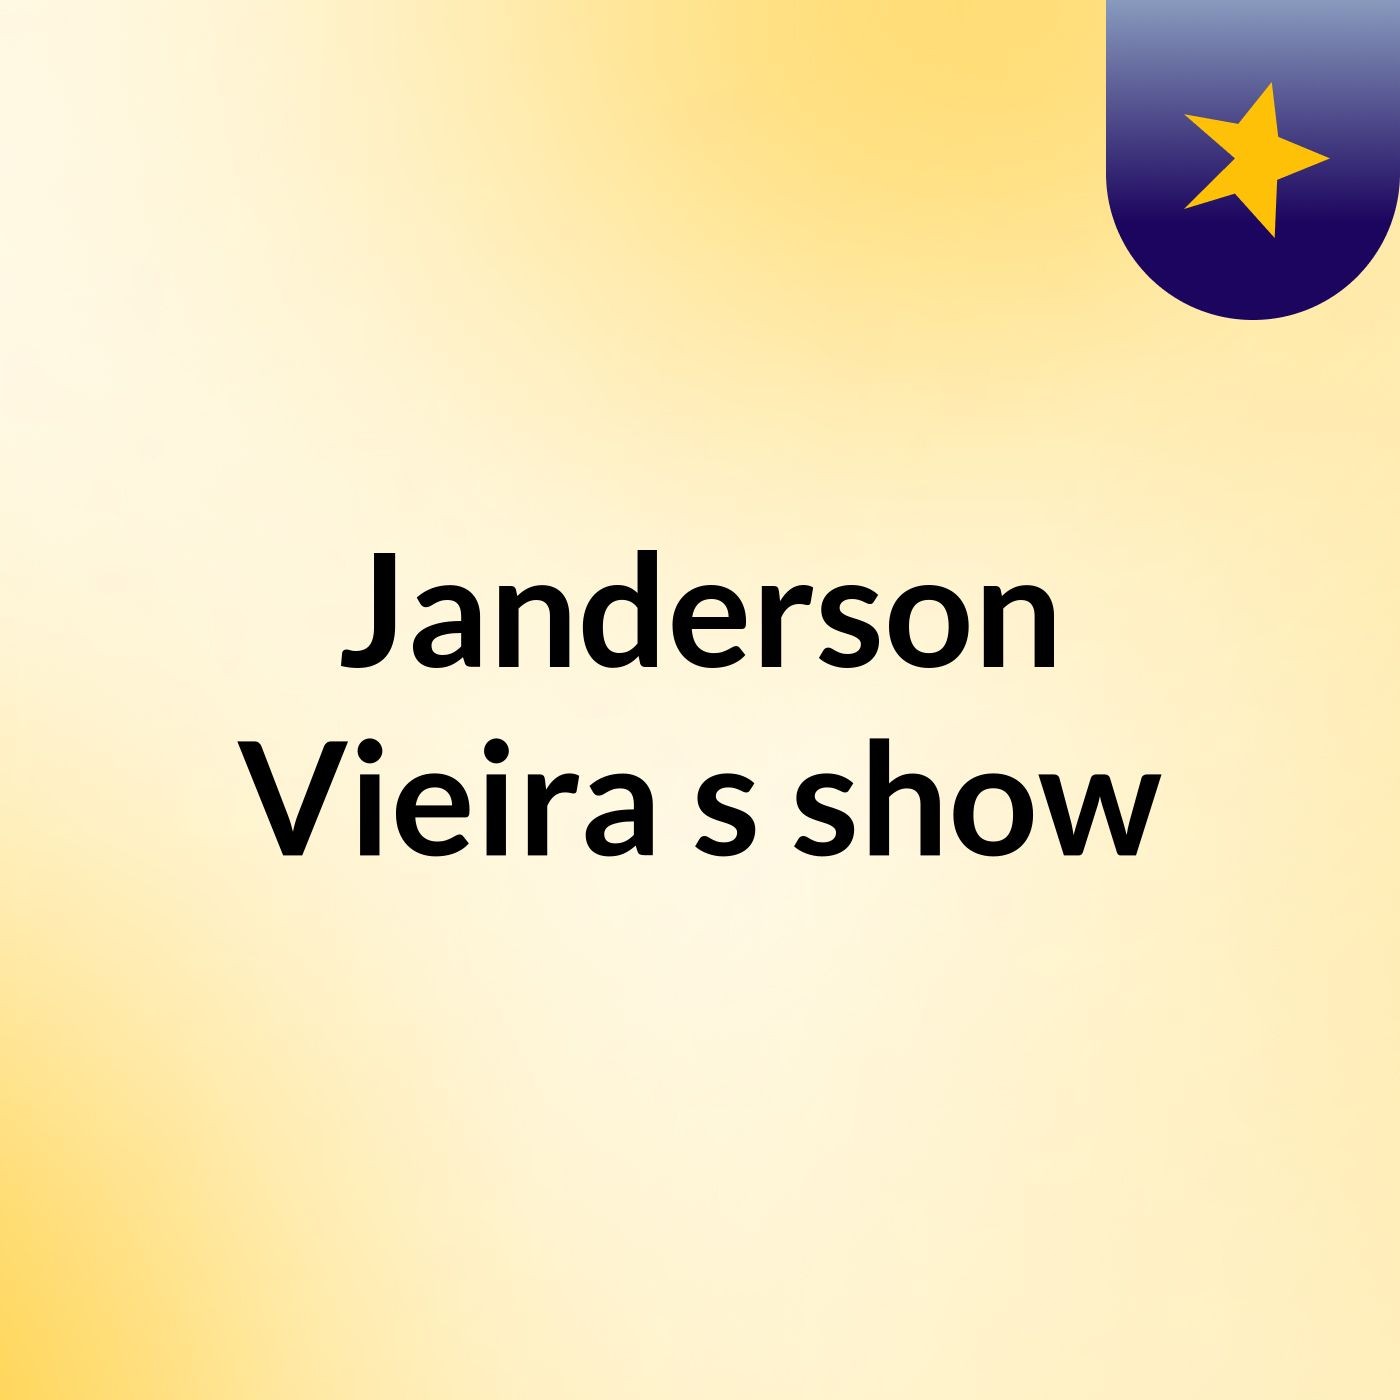 Janderson Vieira's show